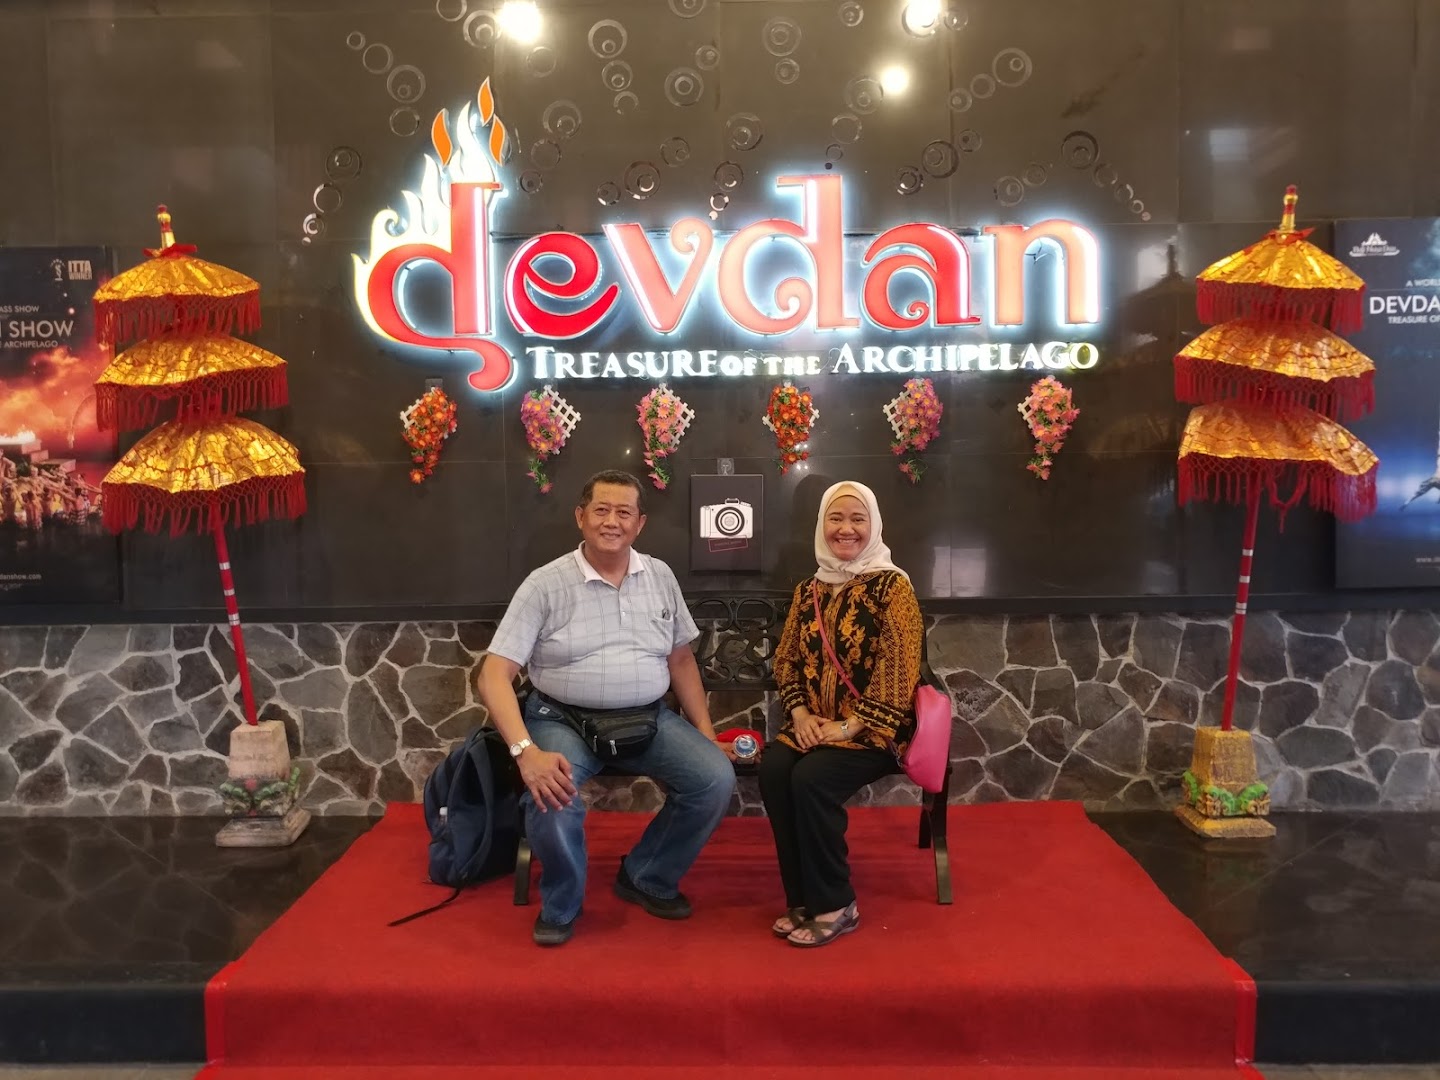 Devdan Show Photo